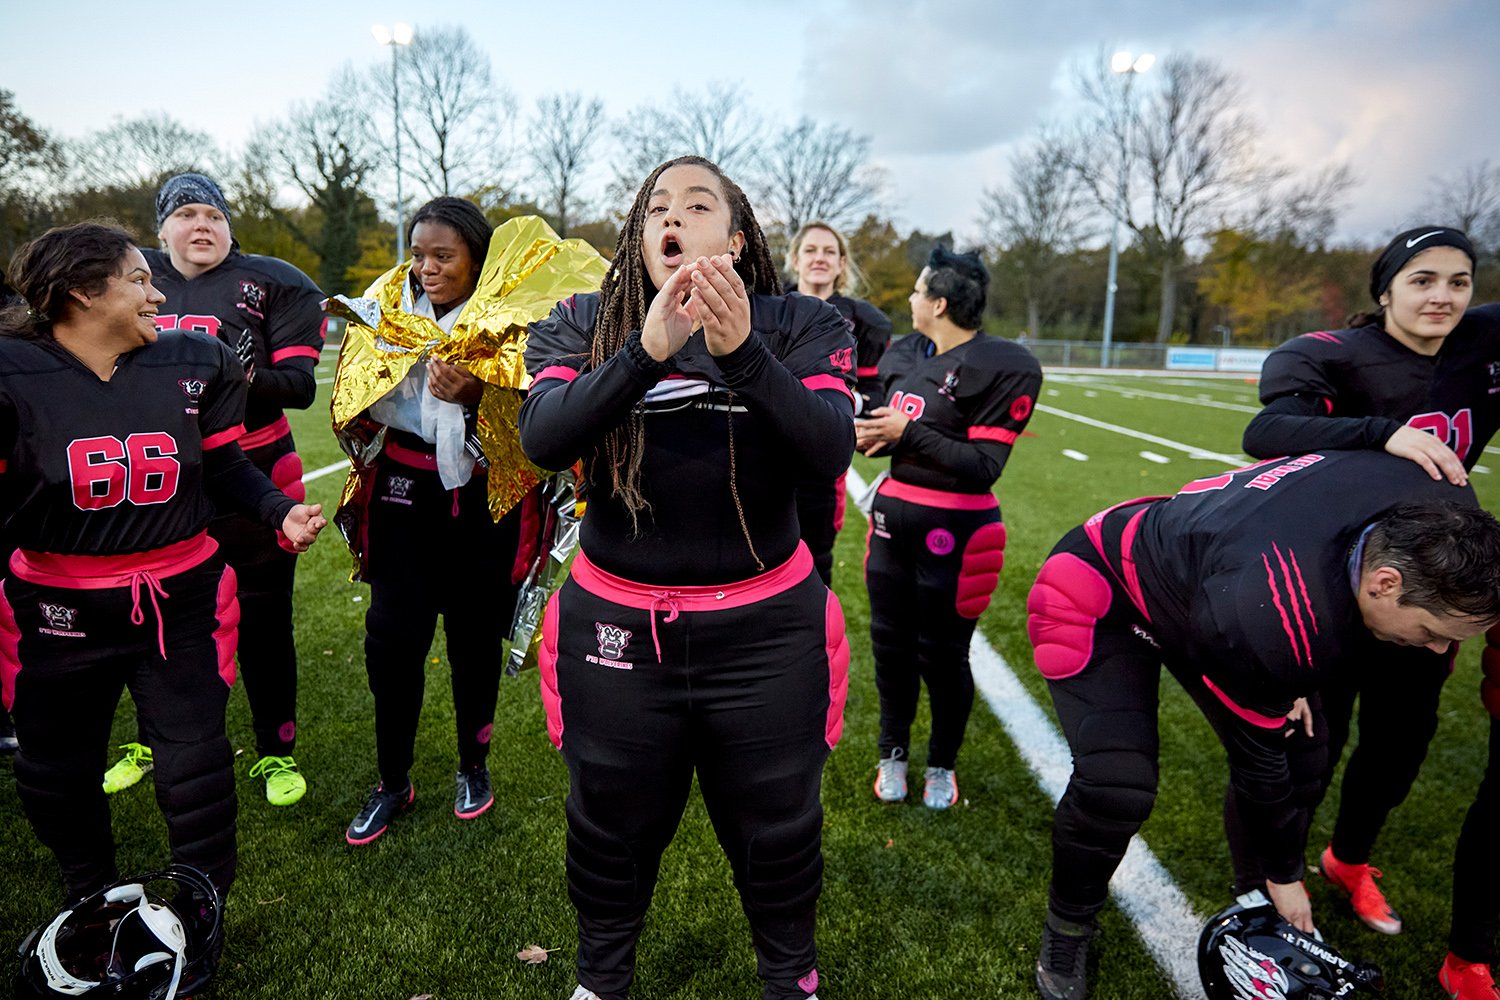  Utrecht Wolverine Safijja applauding her own team after loosing against the Amsterdam Cats, Amsterdam, NL, 2021. 